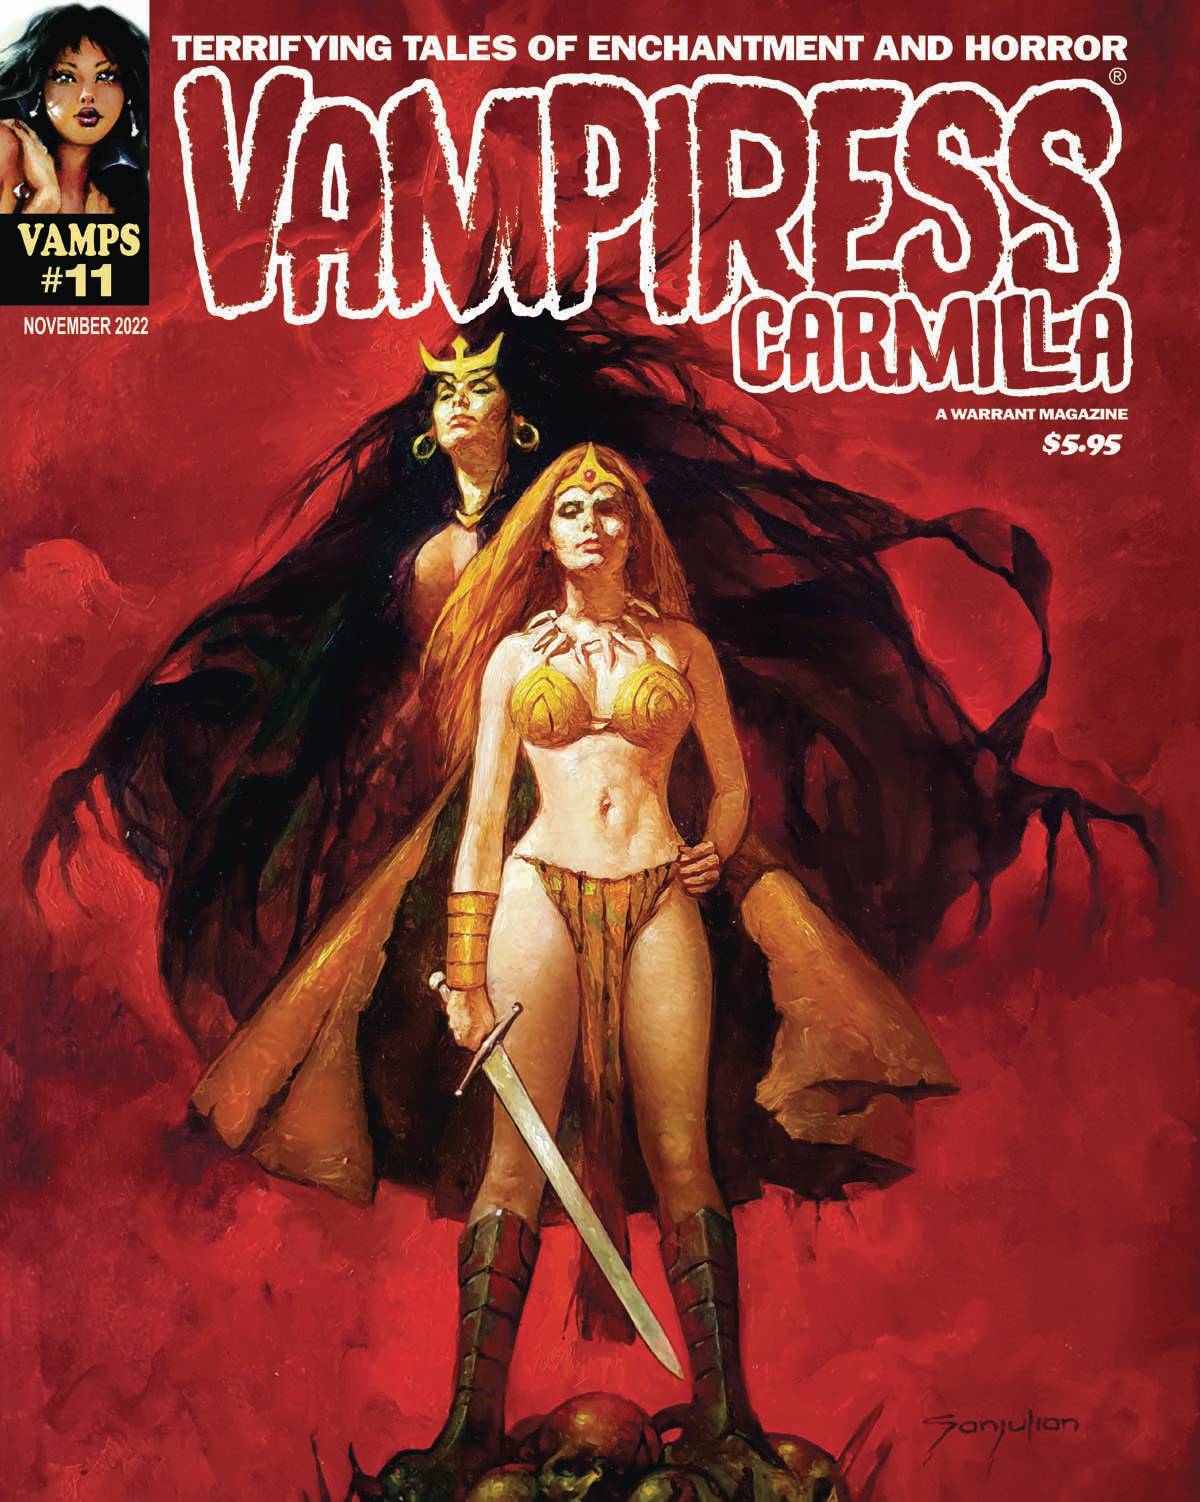 VAMPIRESS CARMILLA MAGAZINE #11